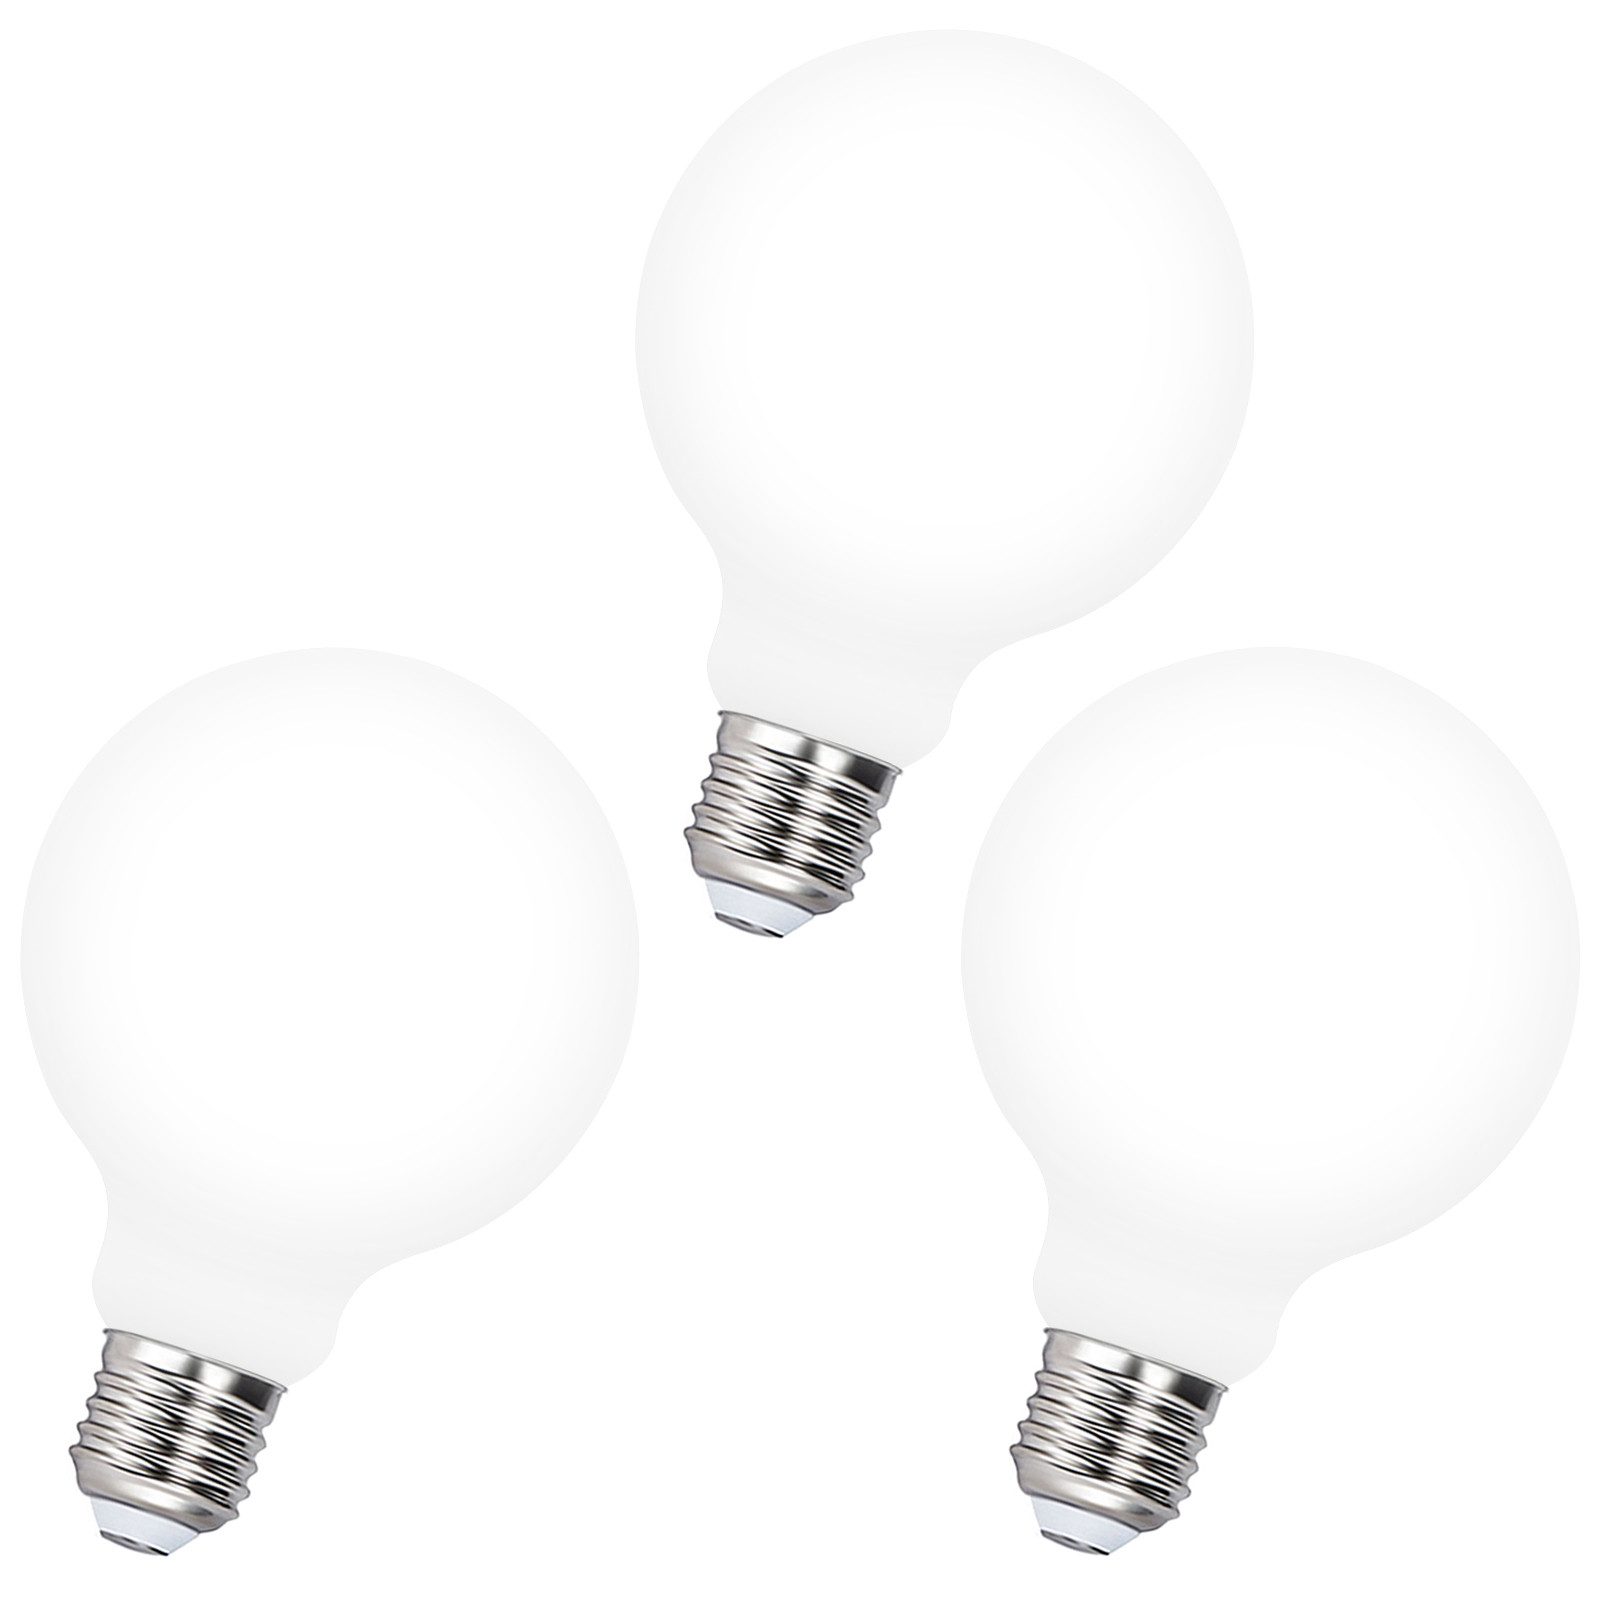 ENUOTEK LED-Leuchtmittel LED Große Glühbirne Lampe 8W 950Lm für Hängelampe Wandlampe Stehlampe, E27, G95, 3 St., Kaltweiß 6000K, Dimmbar